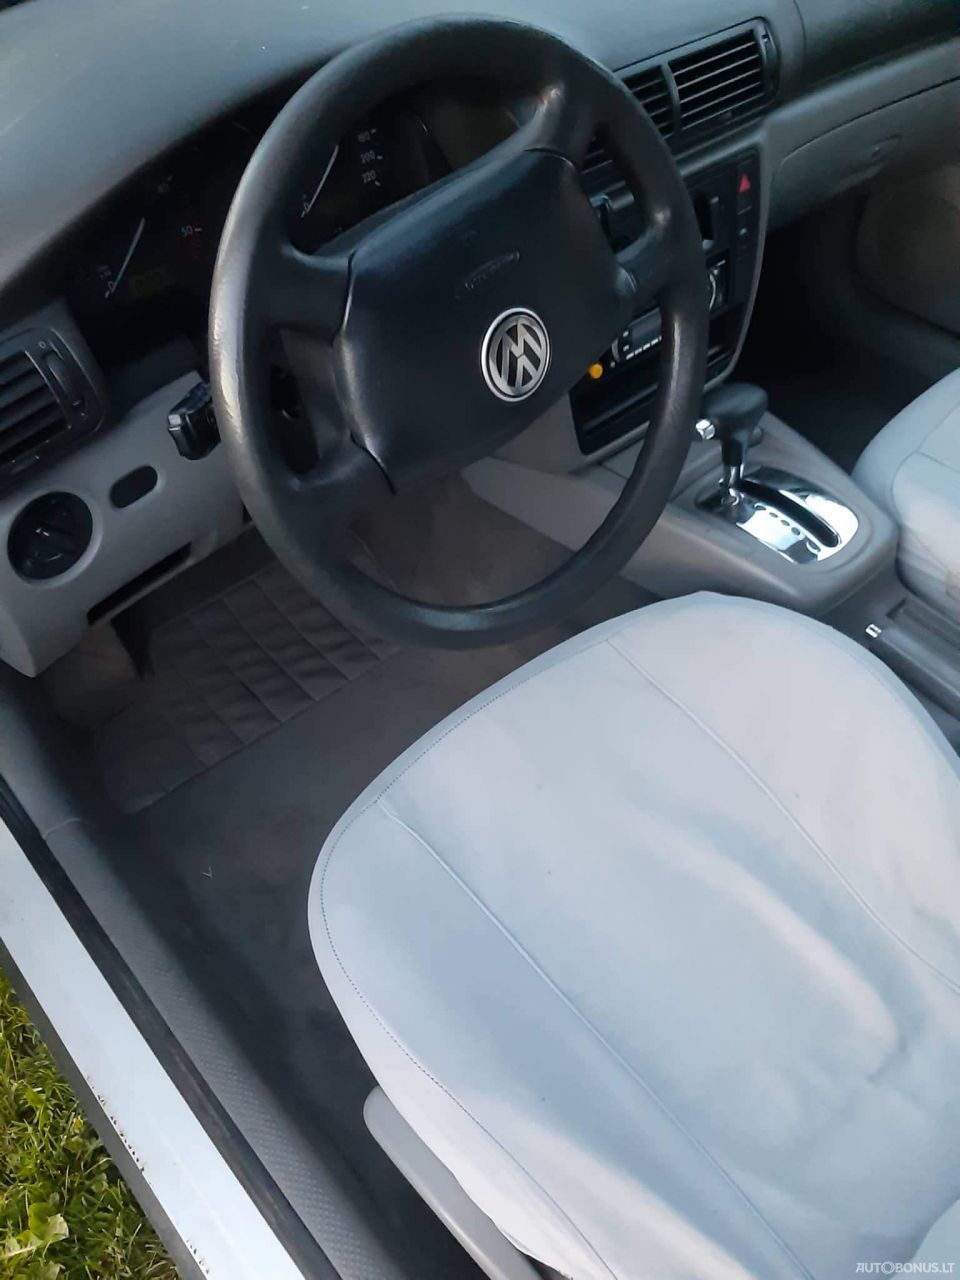 Volkswagen Passat, Sedanas